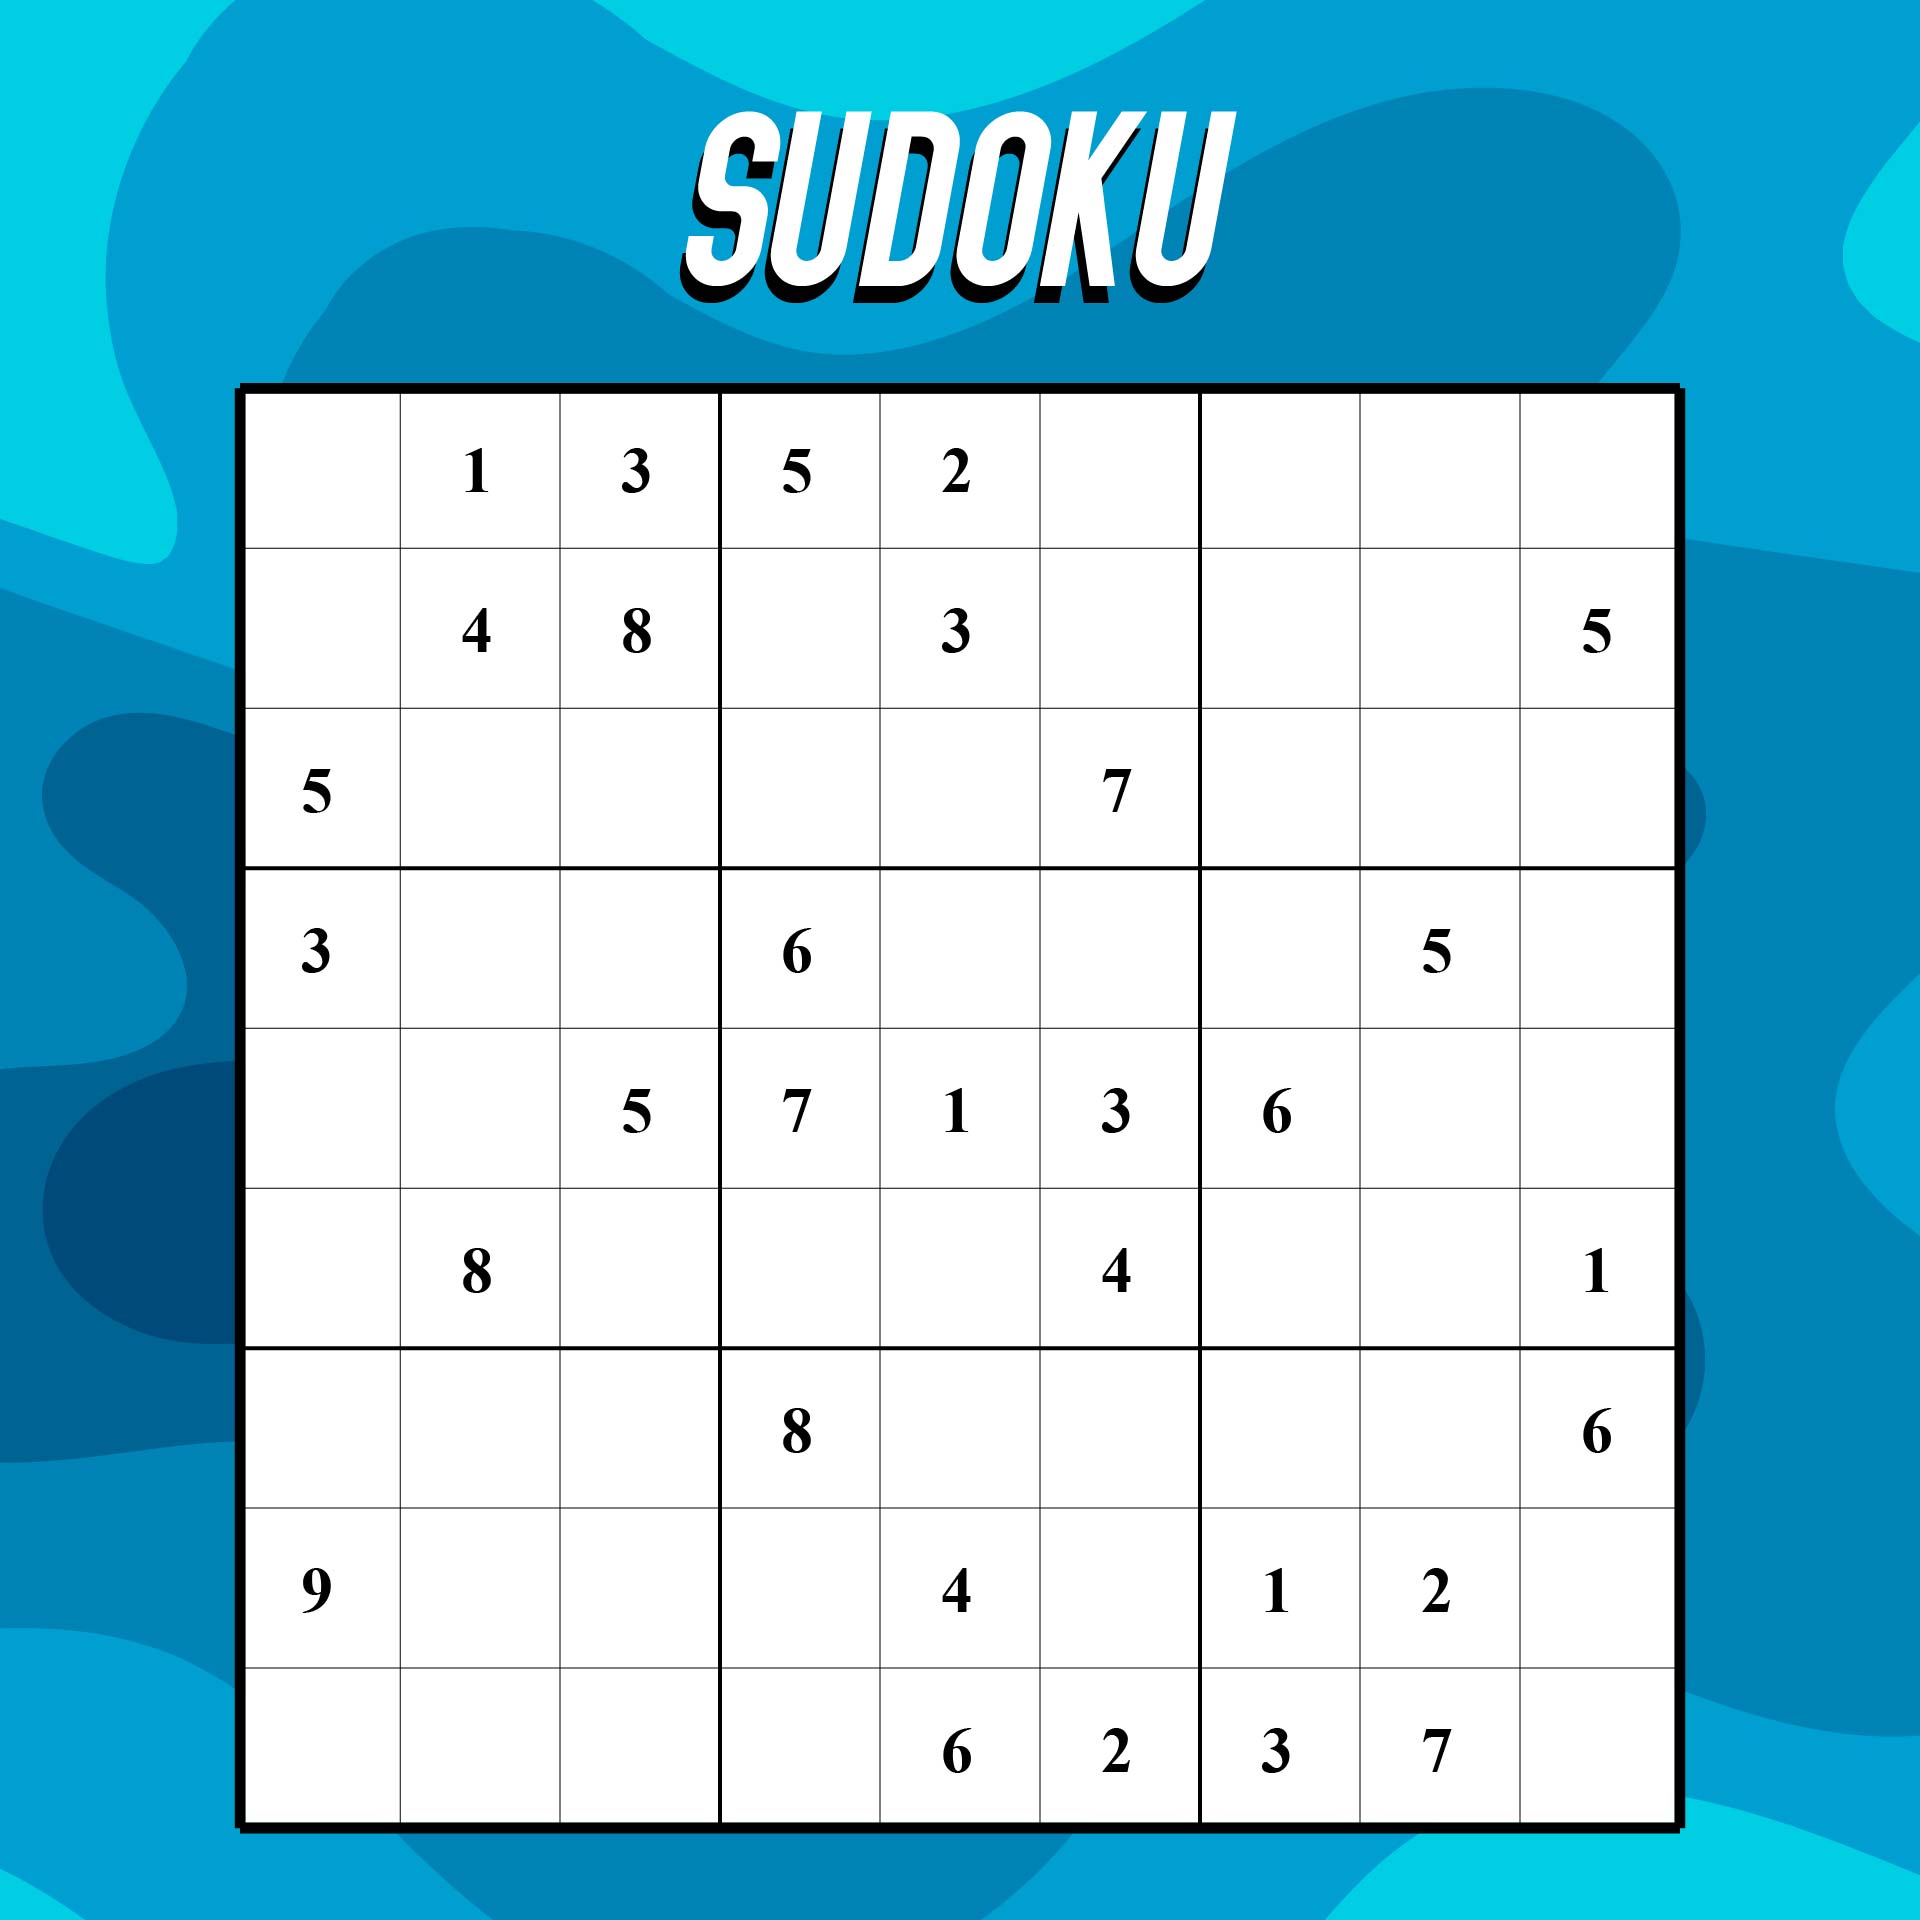 Easy Printable Sudoku Puzzles